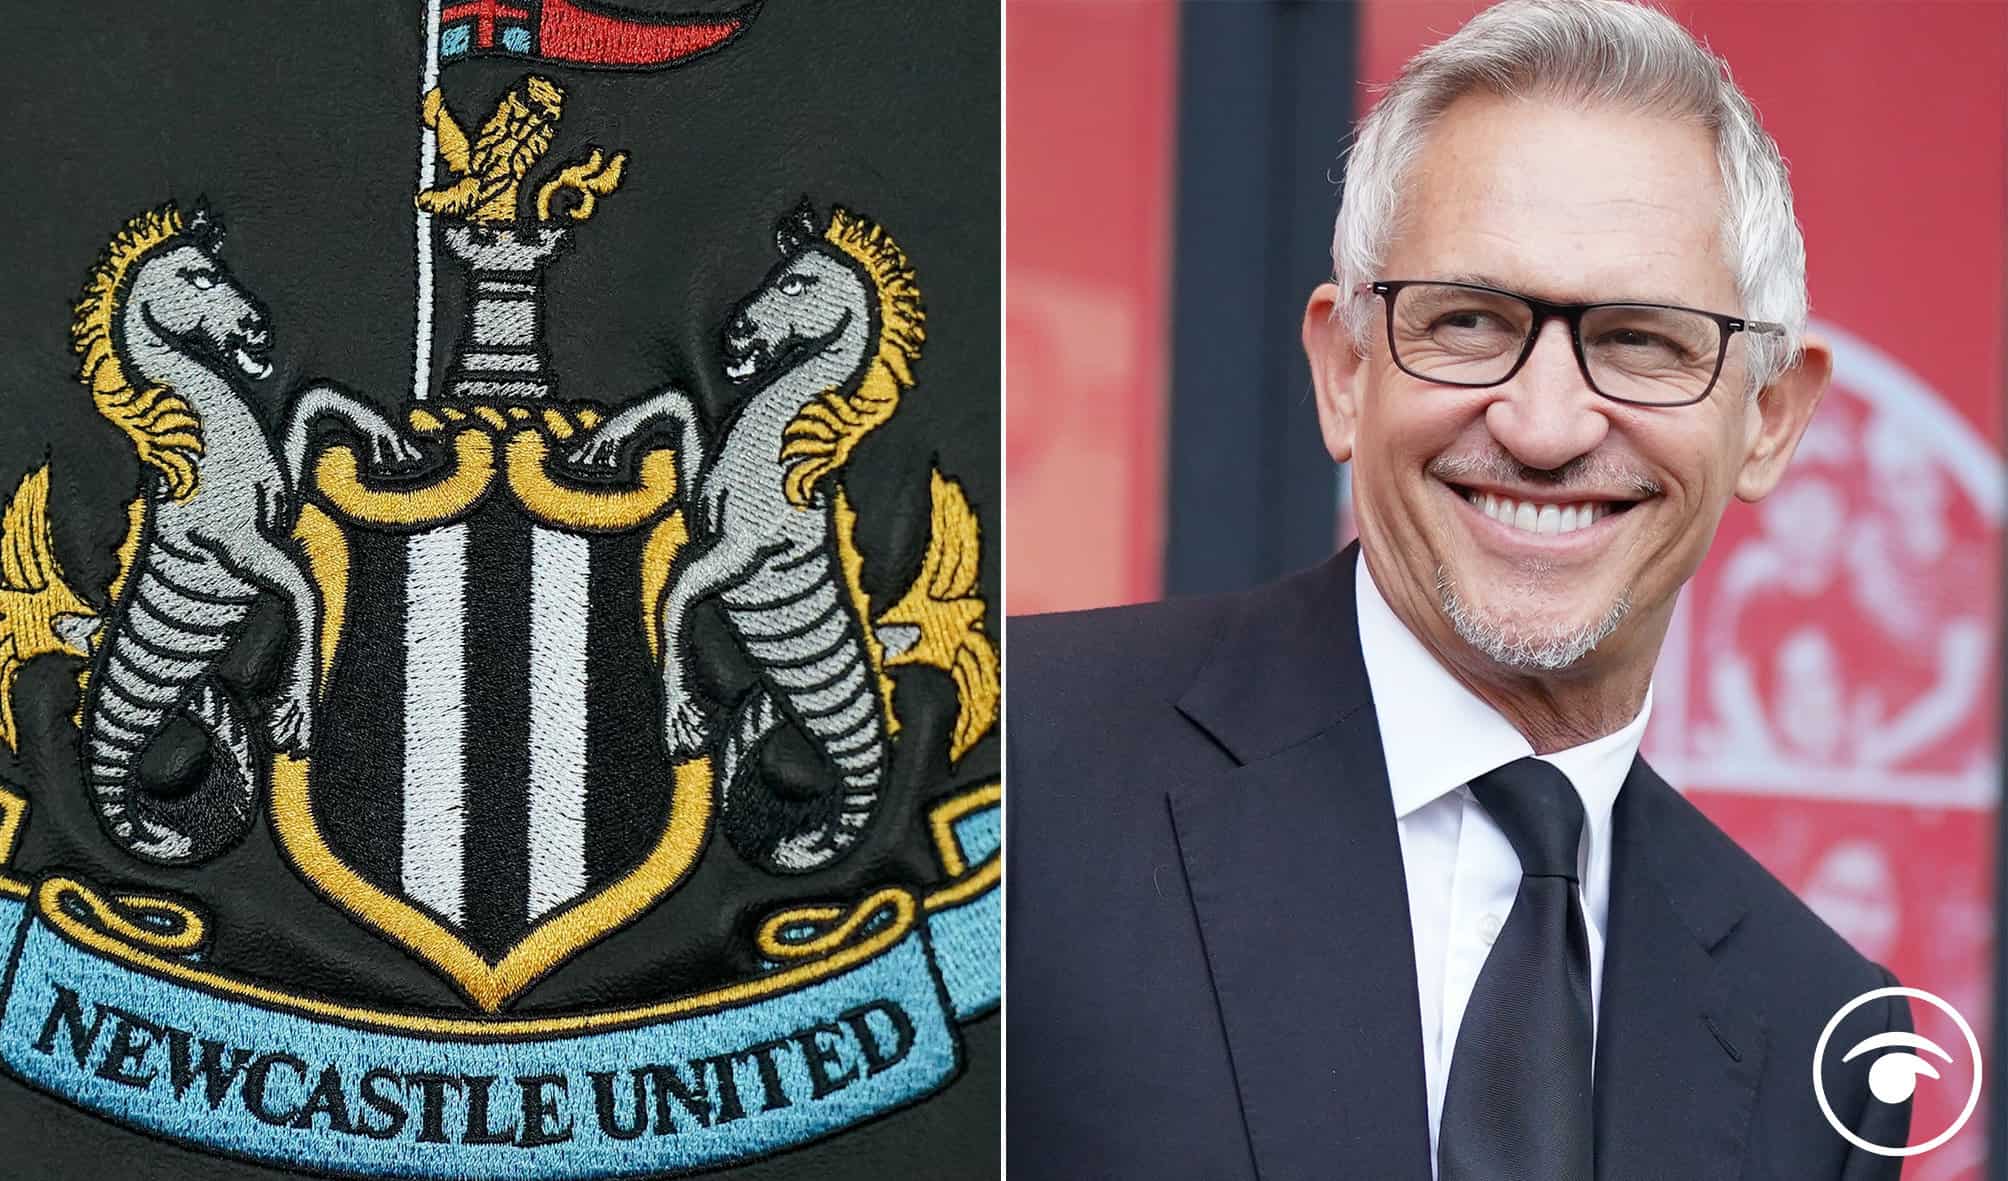 Gary Lineker cracks joke about Newcastle United substitution against Man City